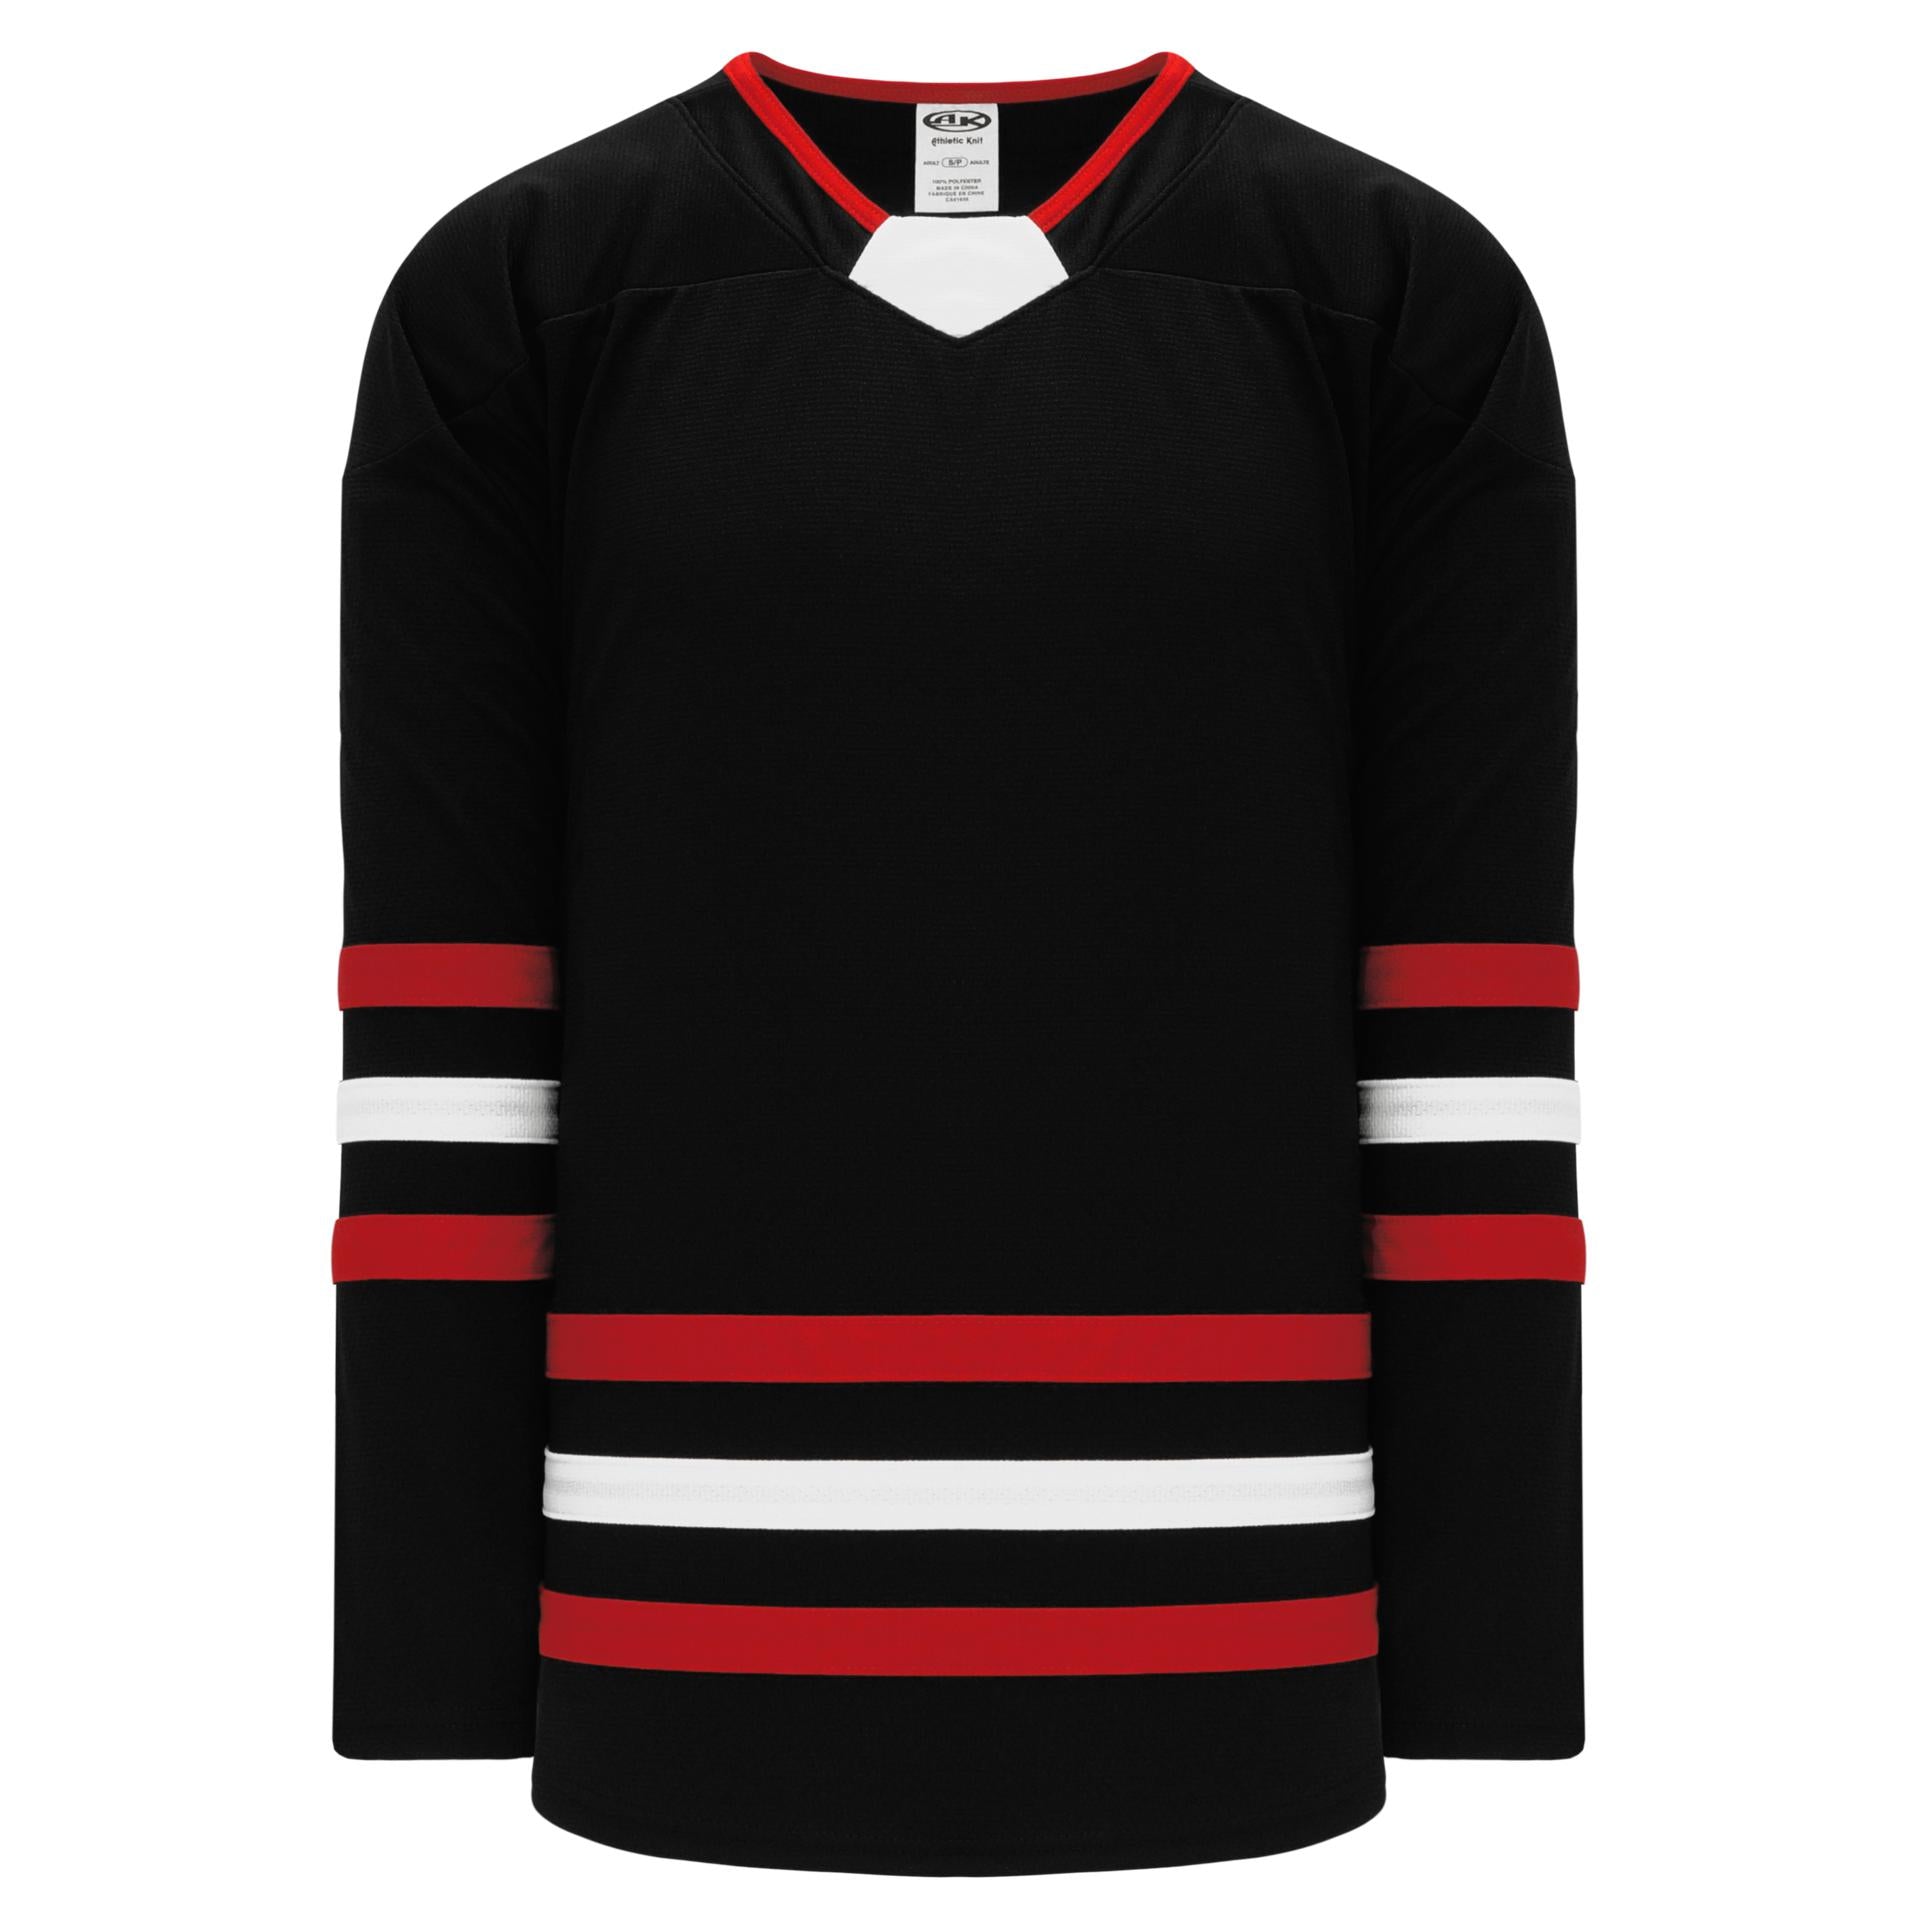 H550B-CHI670B Chicago Blackhawks Blank Hockey Jerseys –